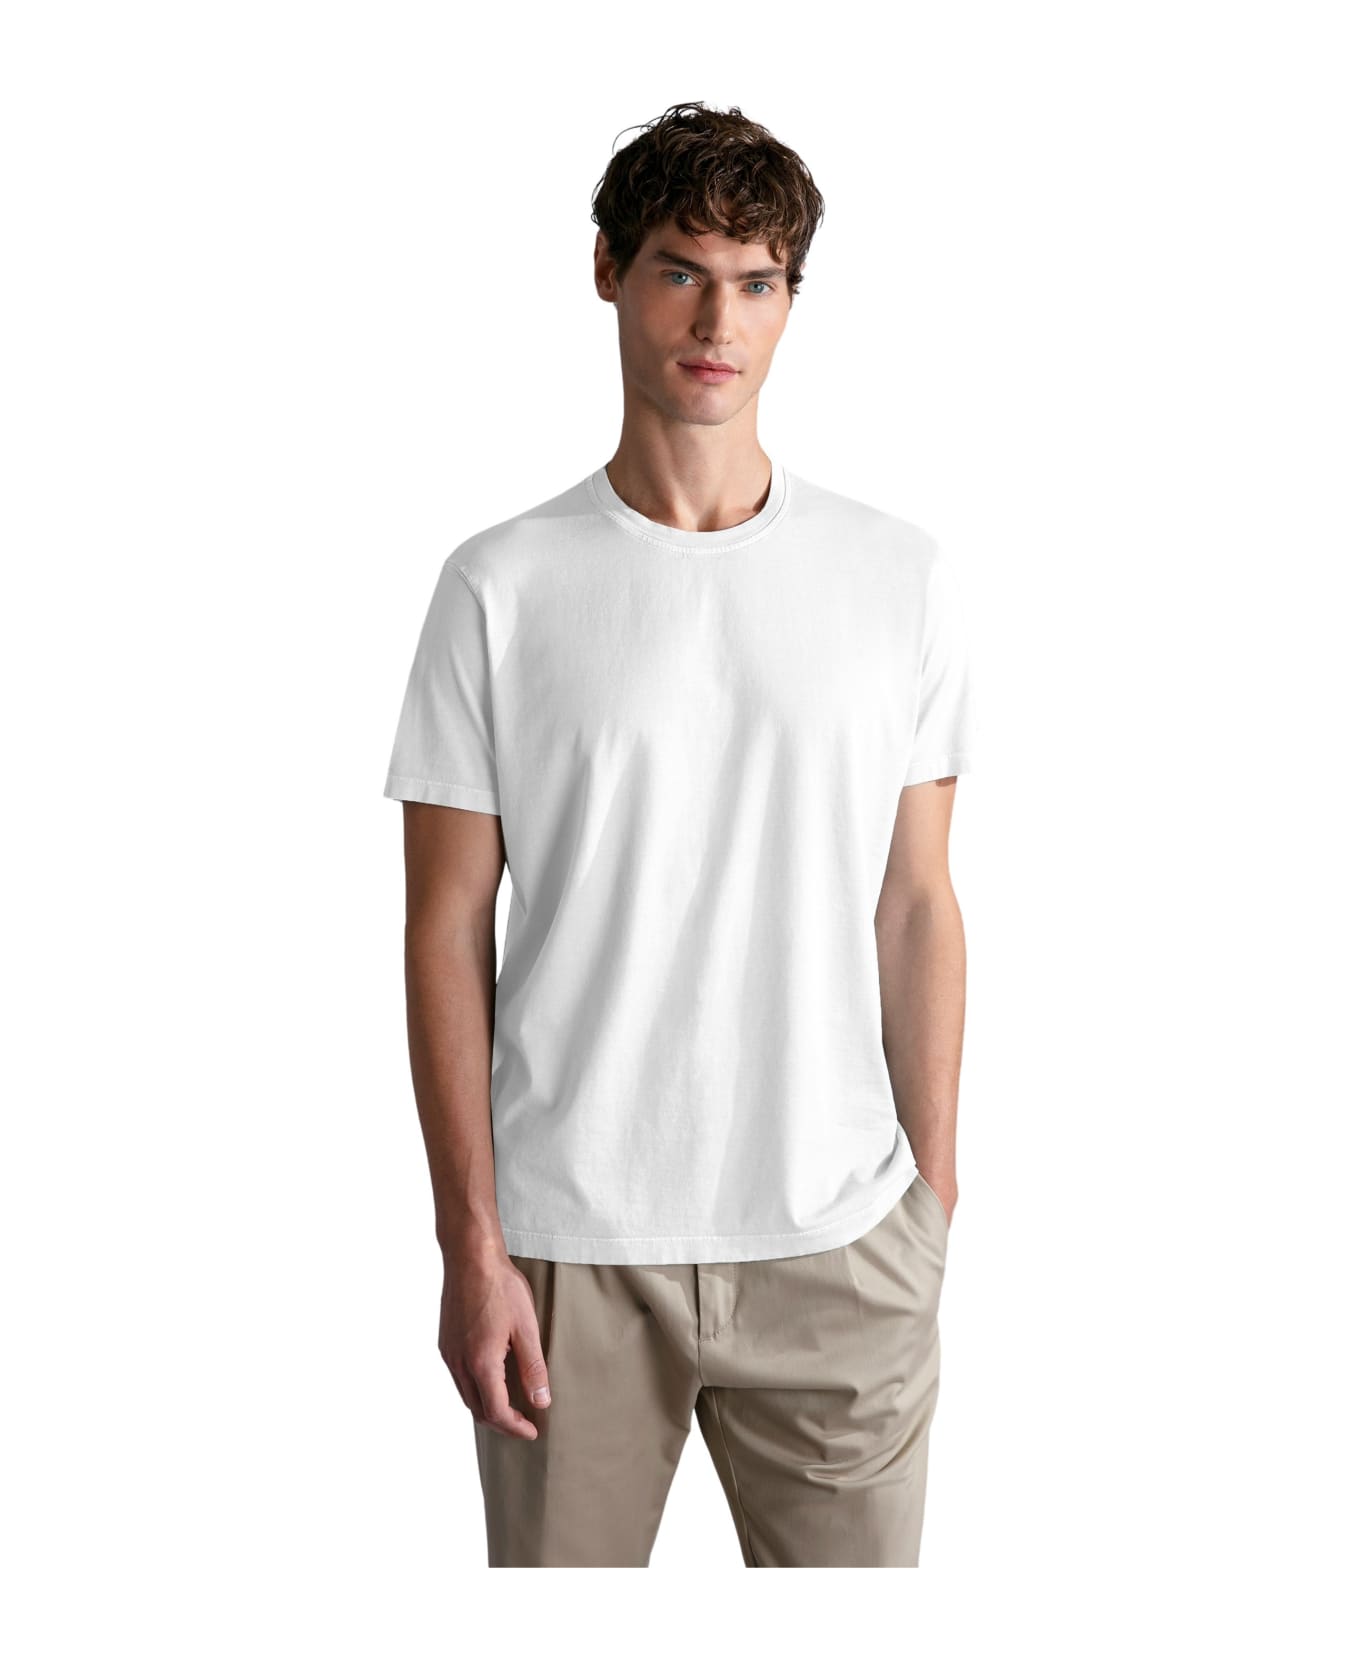 Paul&Shark Tshirt - White シャツ